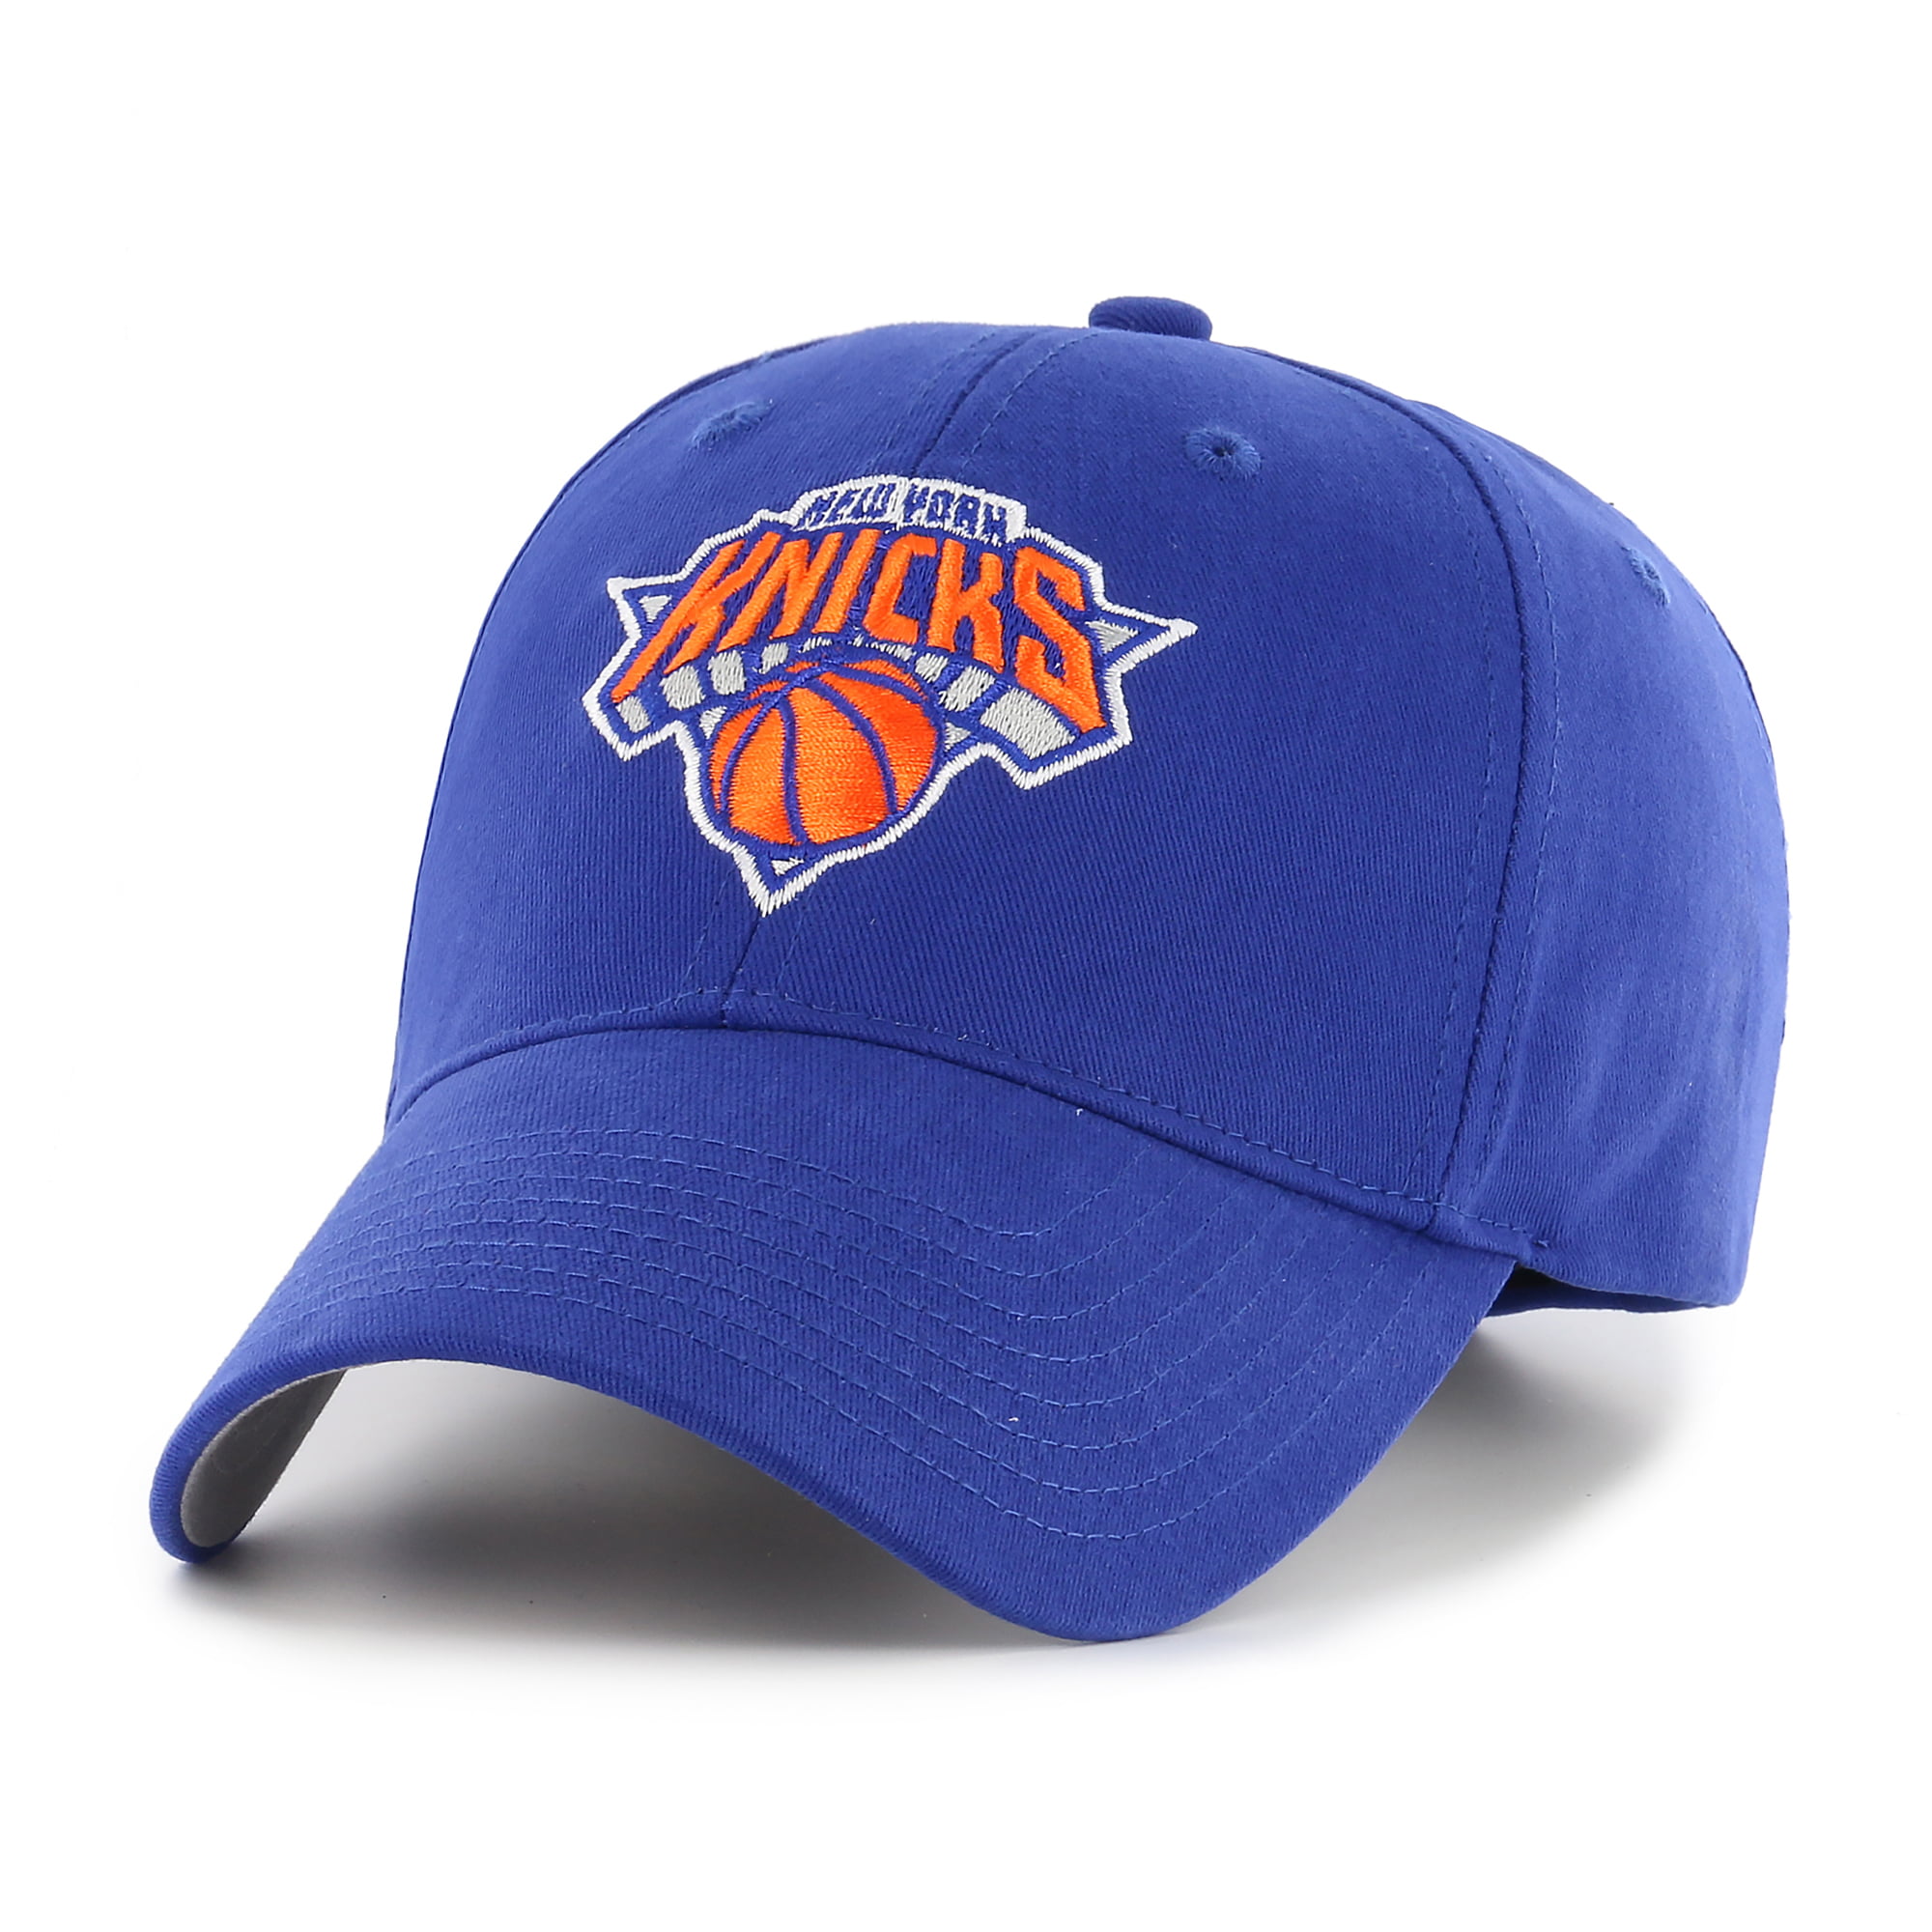 NBA New York Knicks Mass Basic Cap/Hat - Fan Favorite - Walmart.com ...